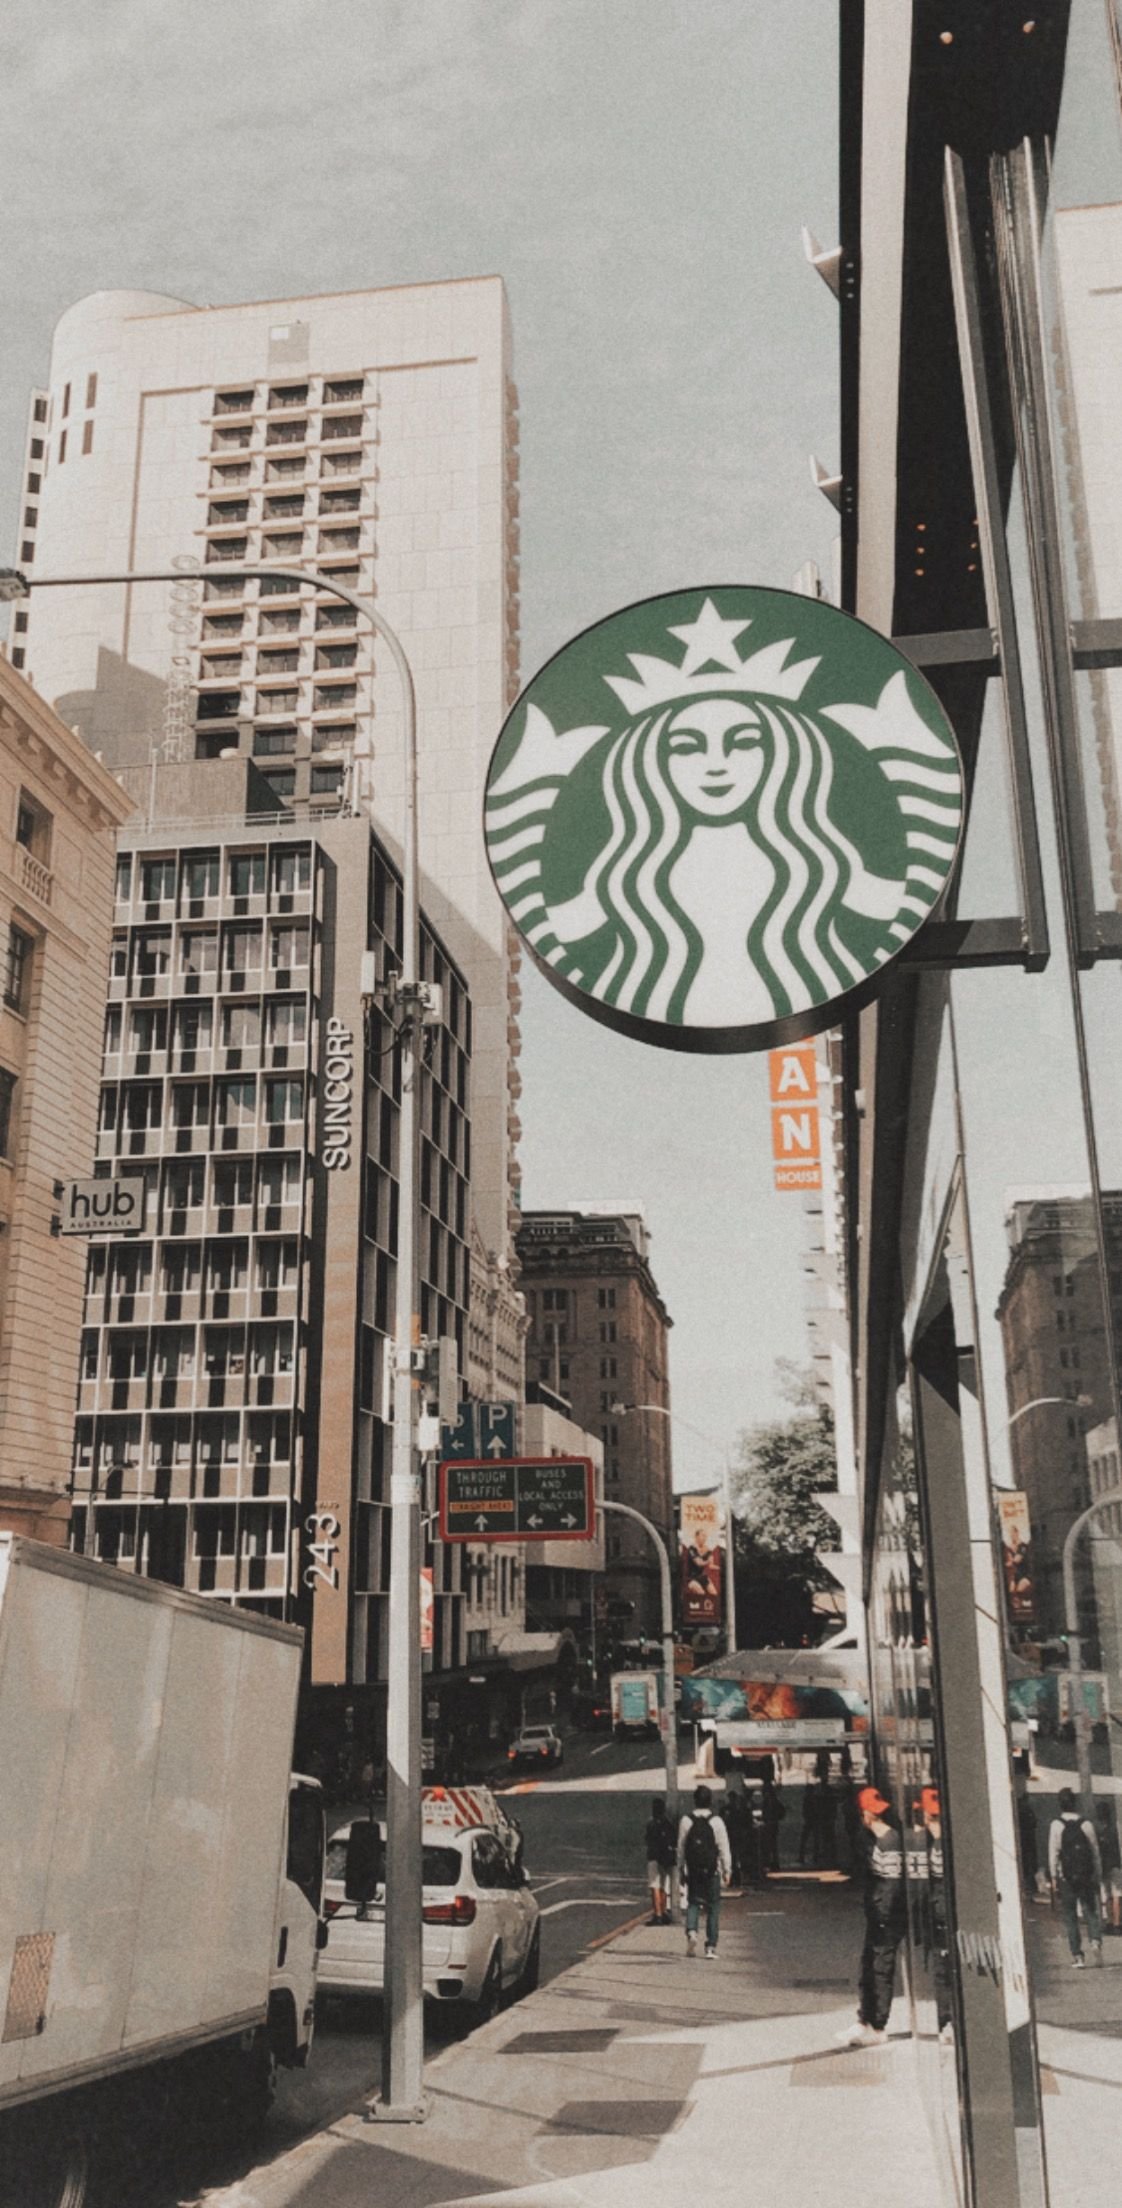 HD wallpaper Starbucks building coffee shop street view facade city  street  Wallpaper Flare